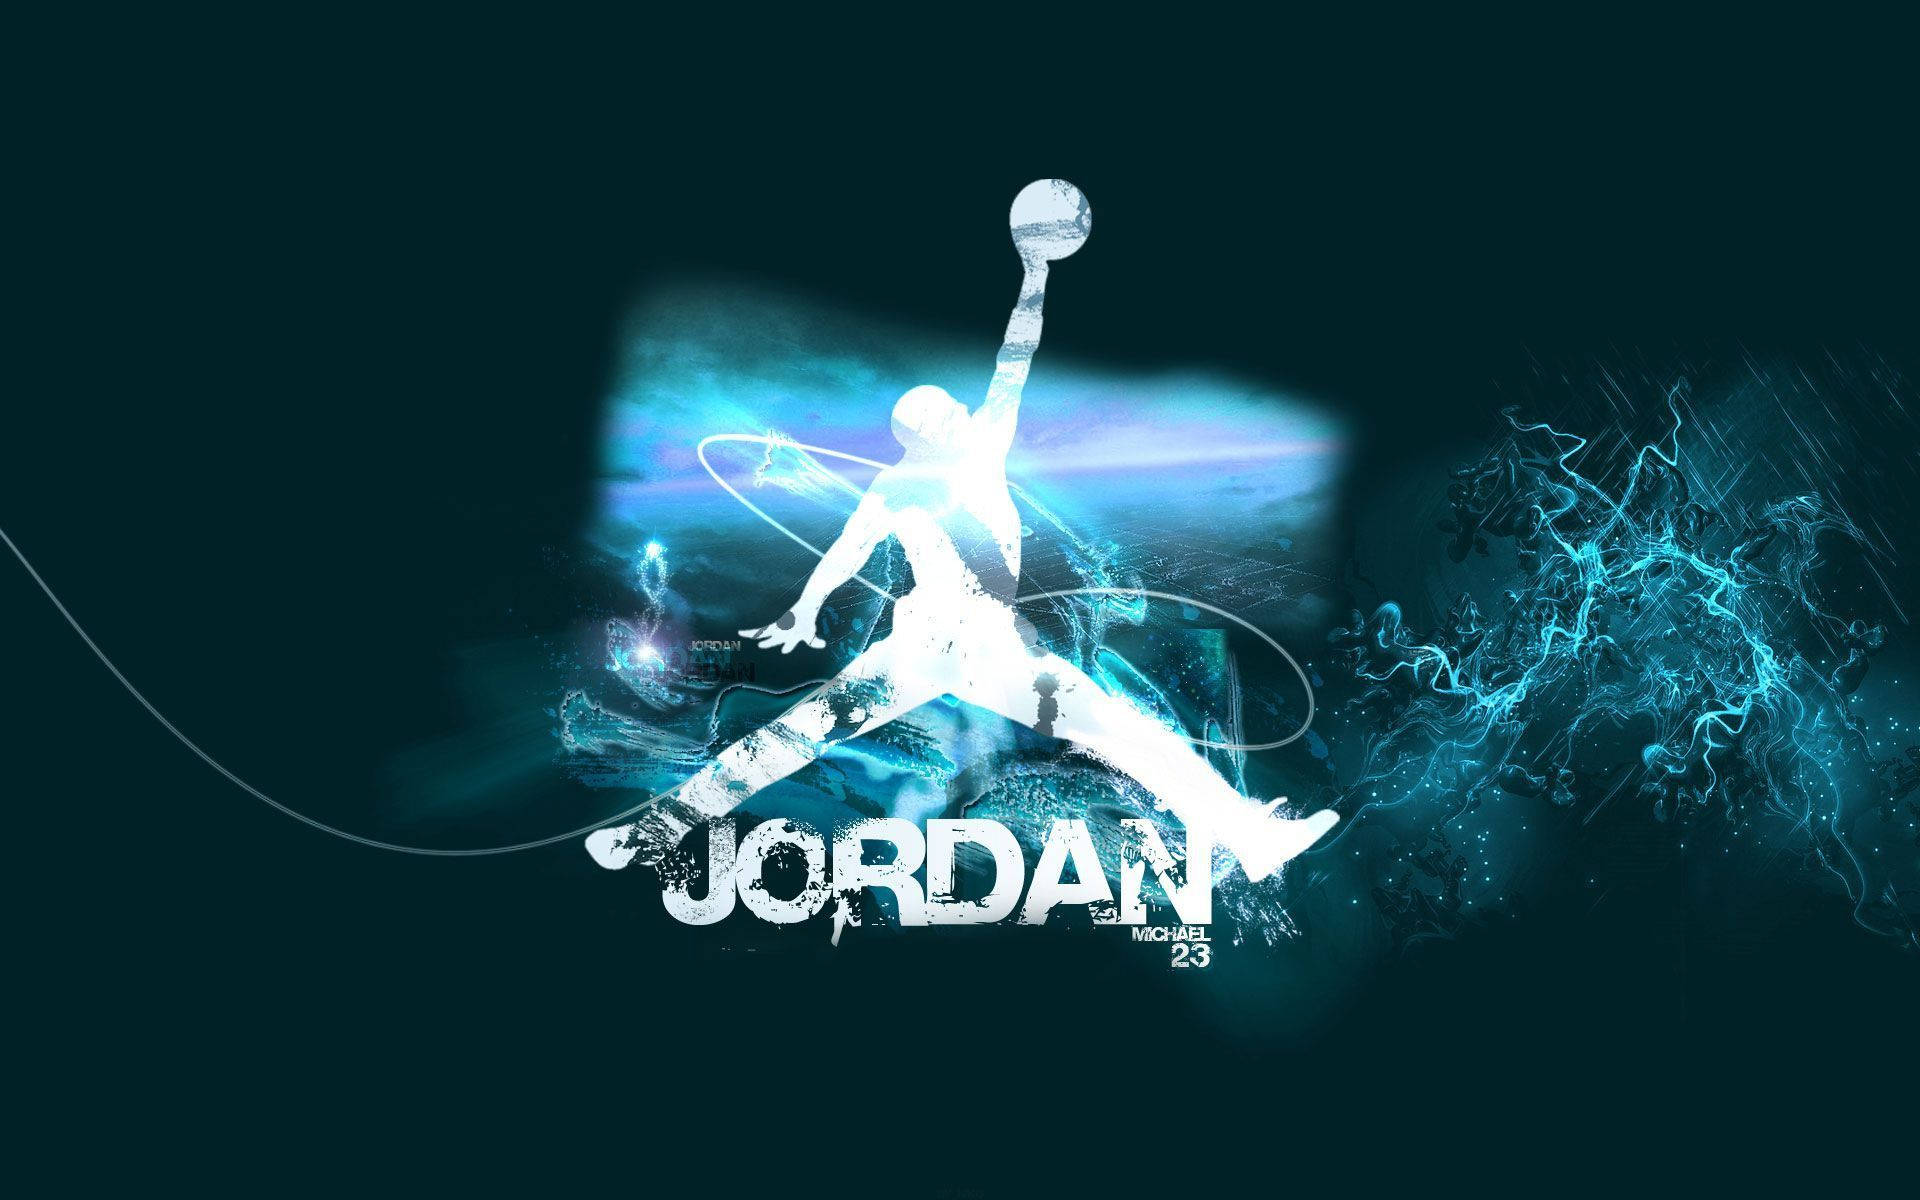 Air Jordan 1920X1200 Wallpaper and Background Image